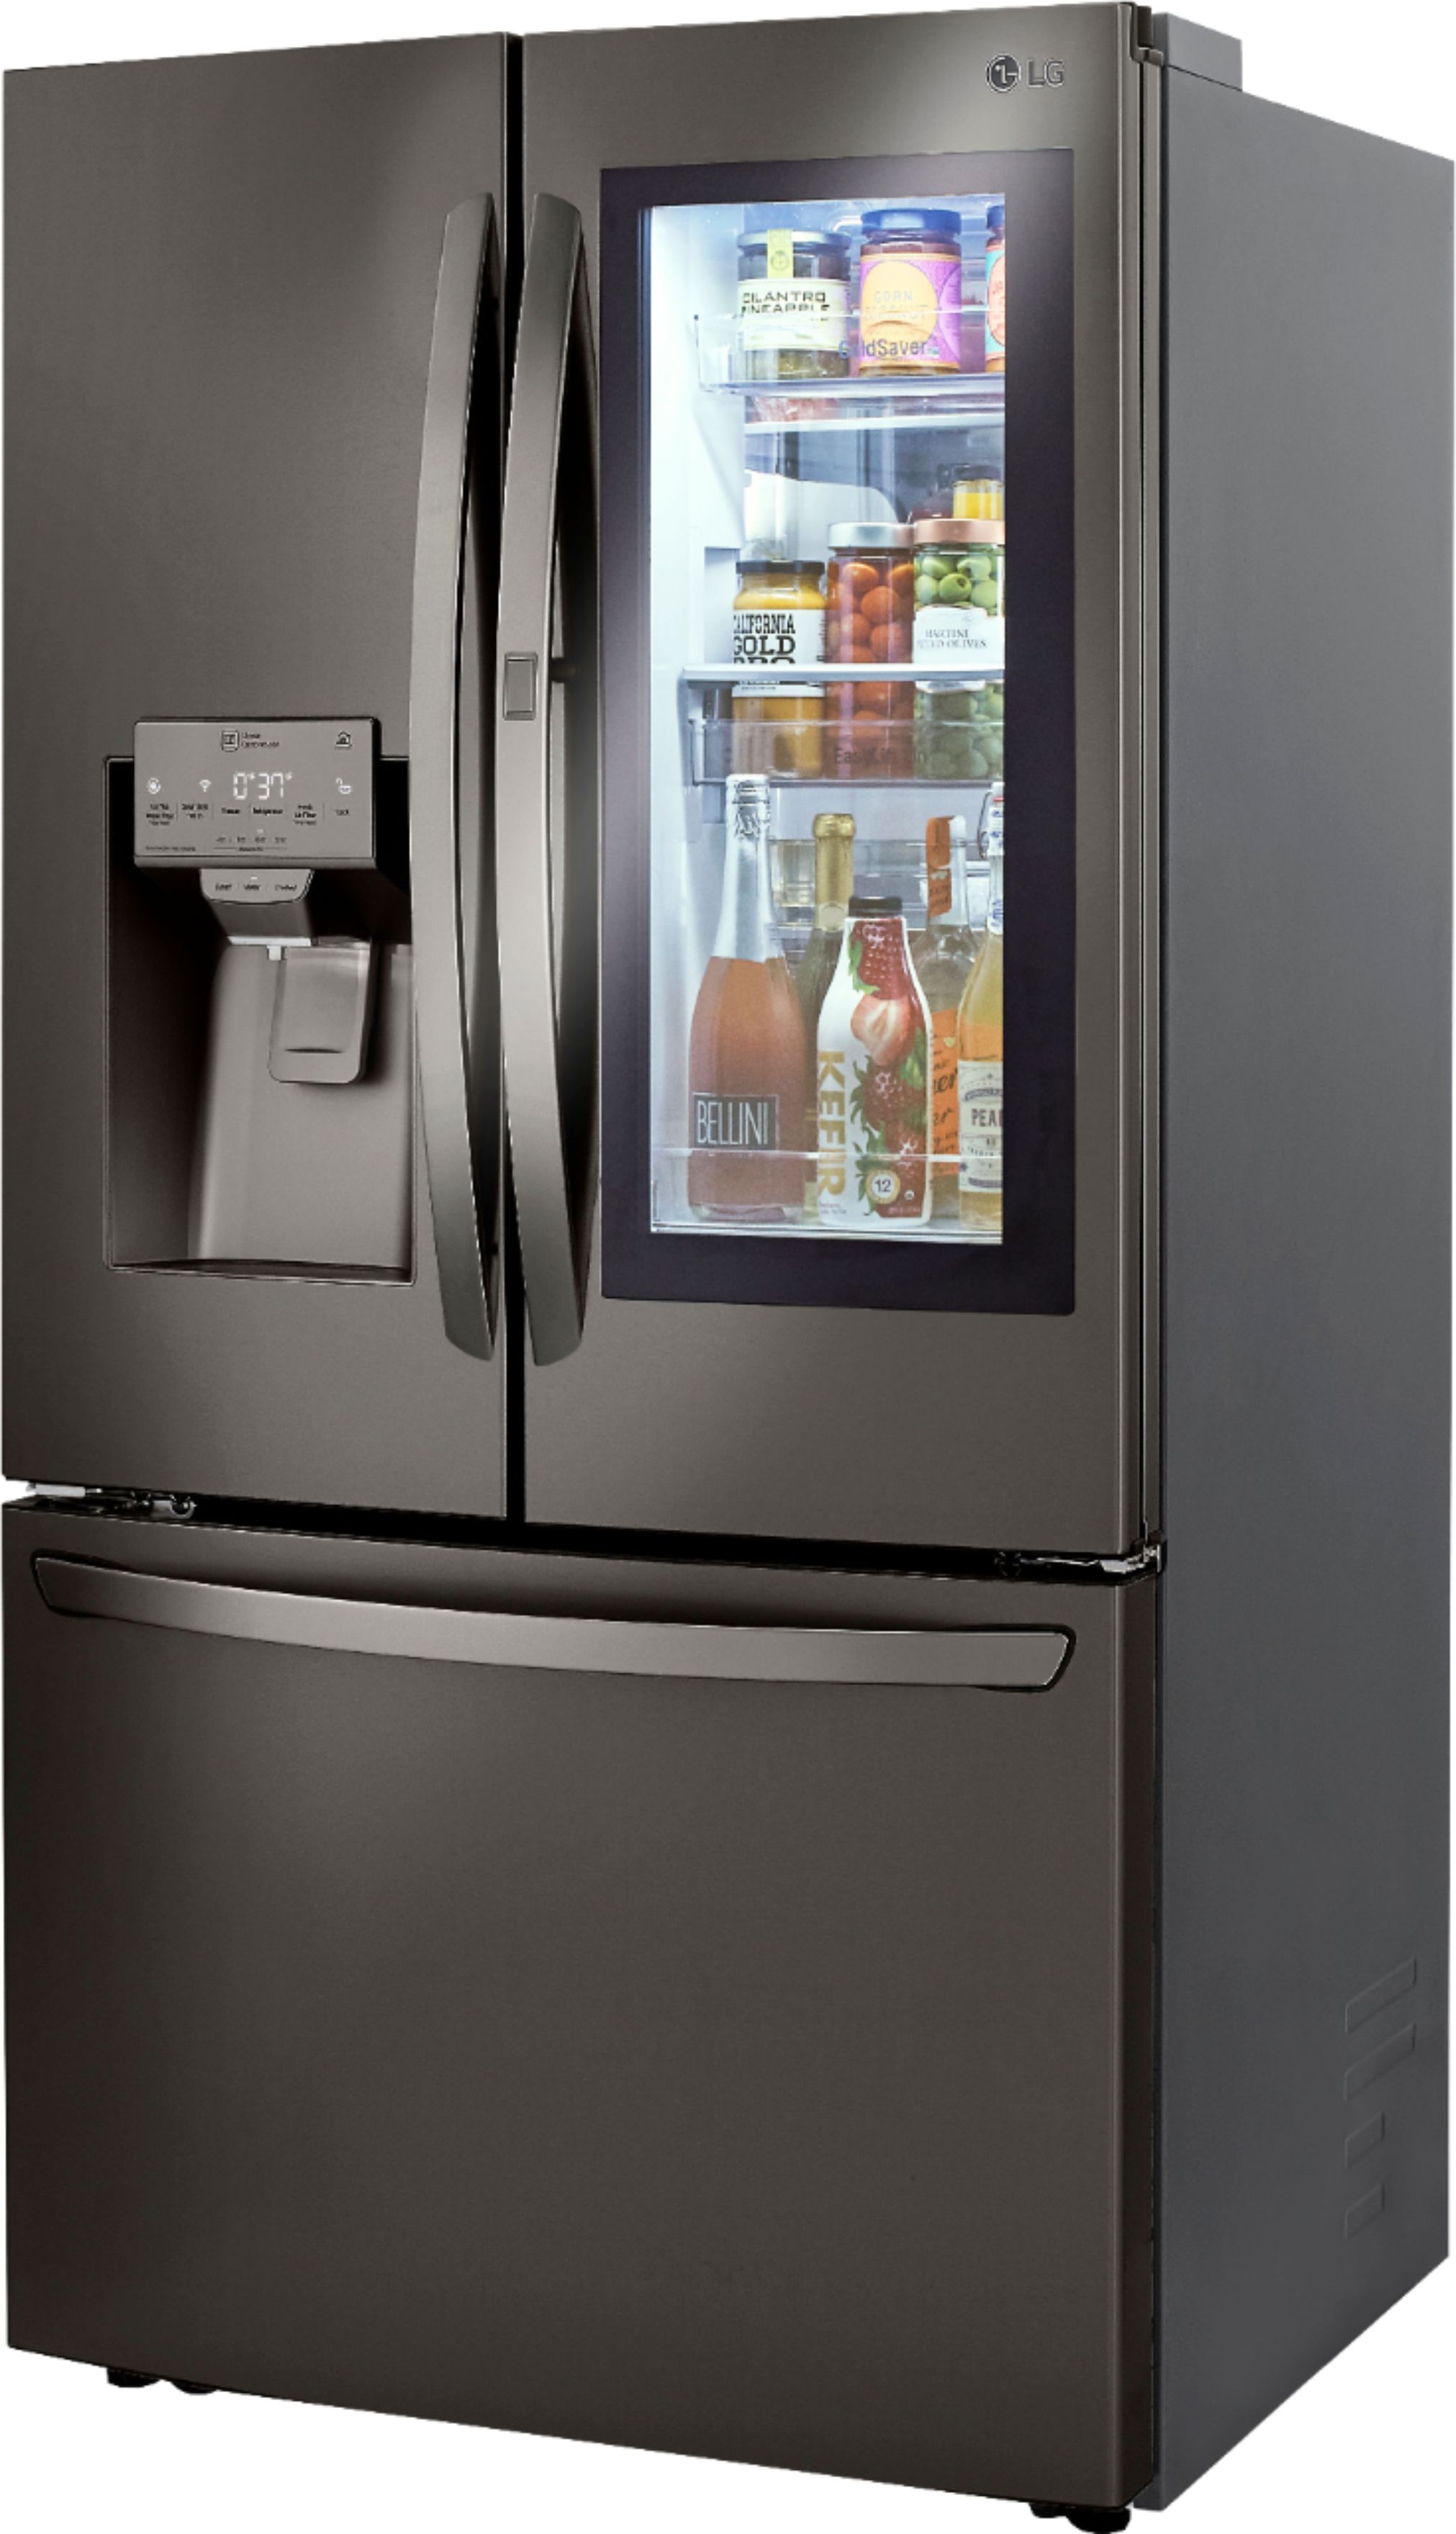 Lg Counter Depth Stainless Steel Refrigerator